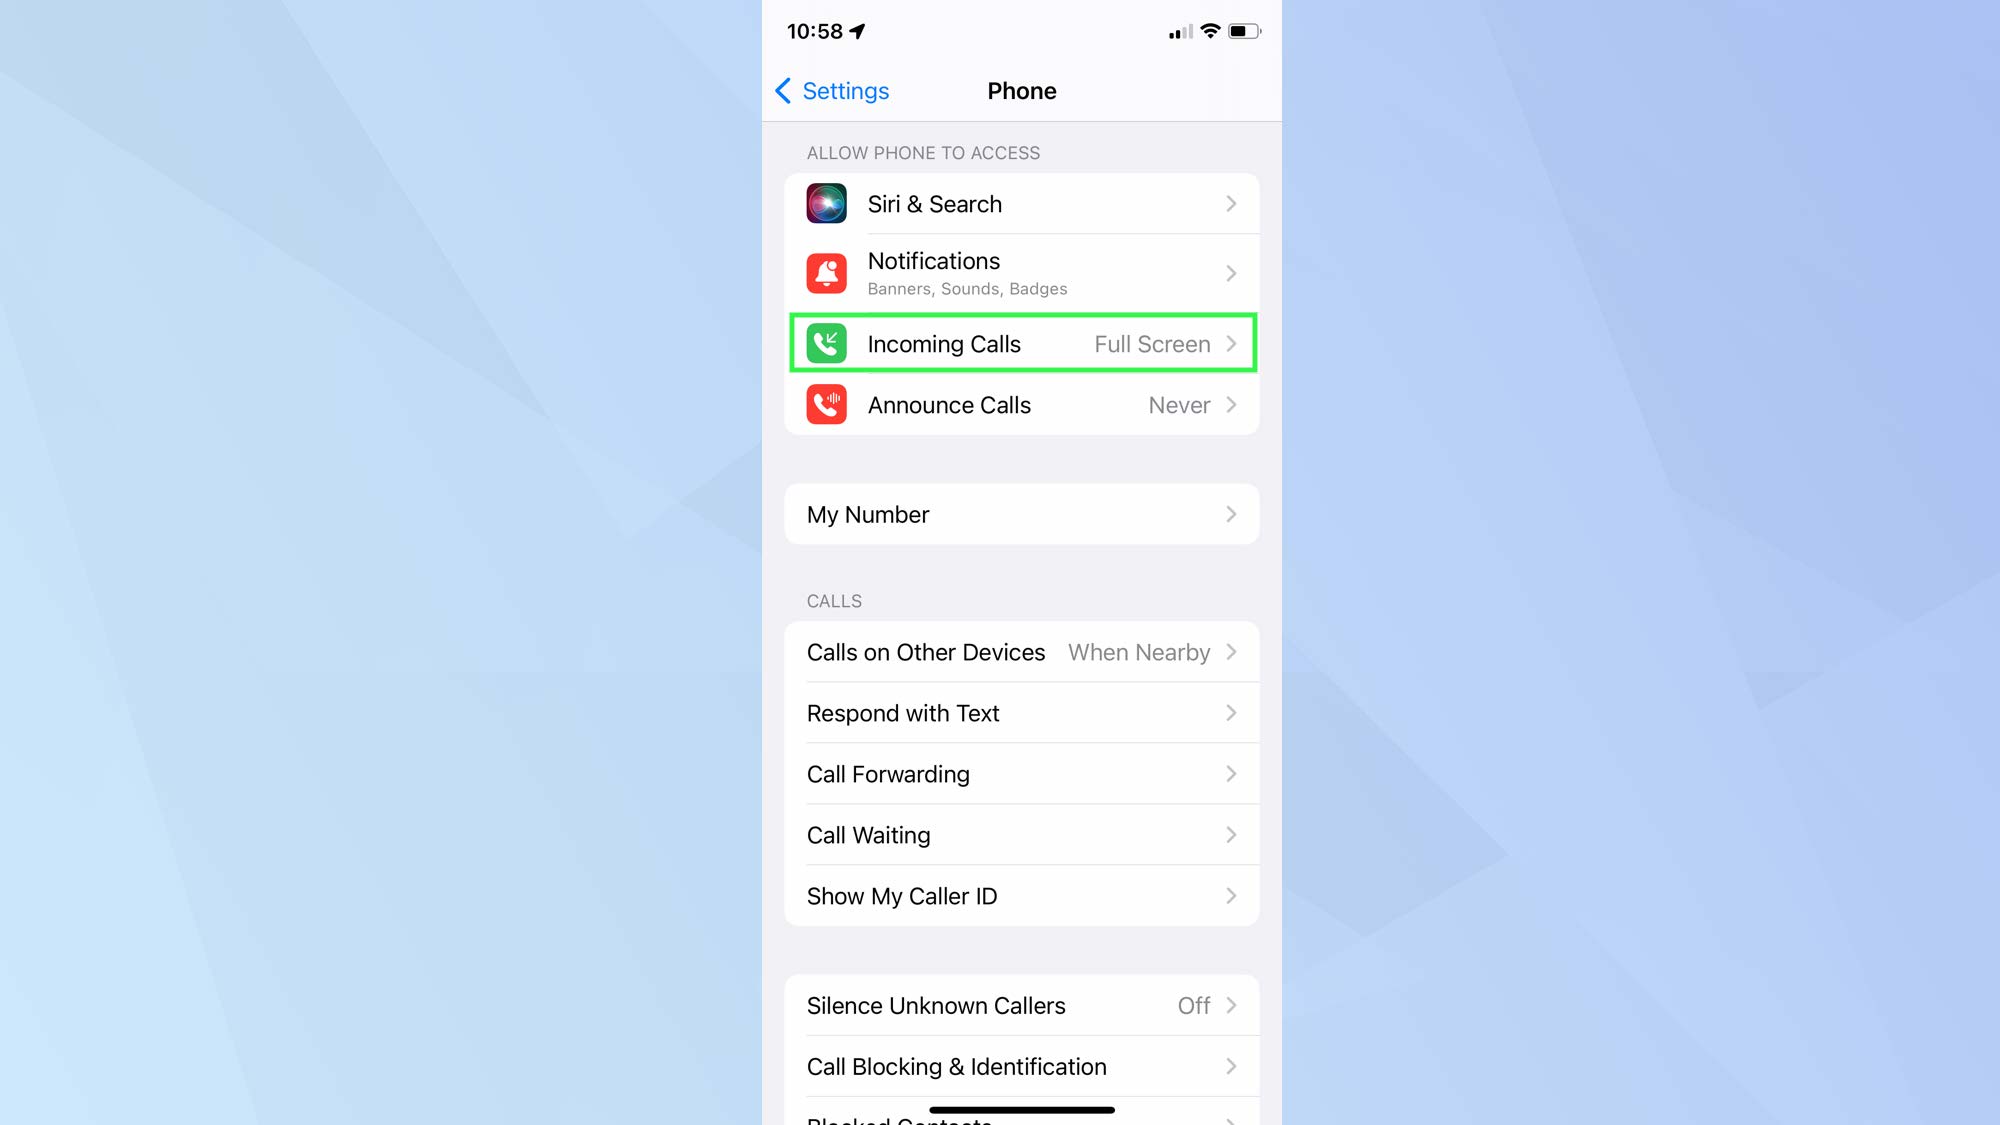 Screenshot showing iOS 15 Settings app with "full screen" selected on "incoming calls" menu